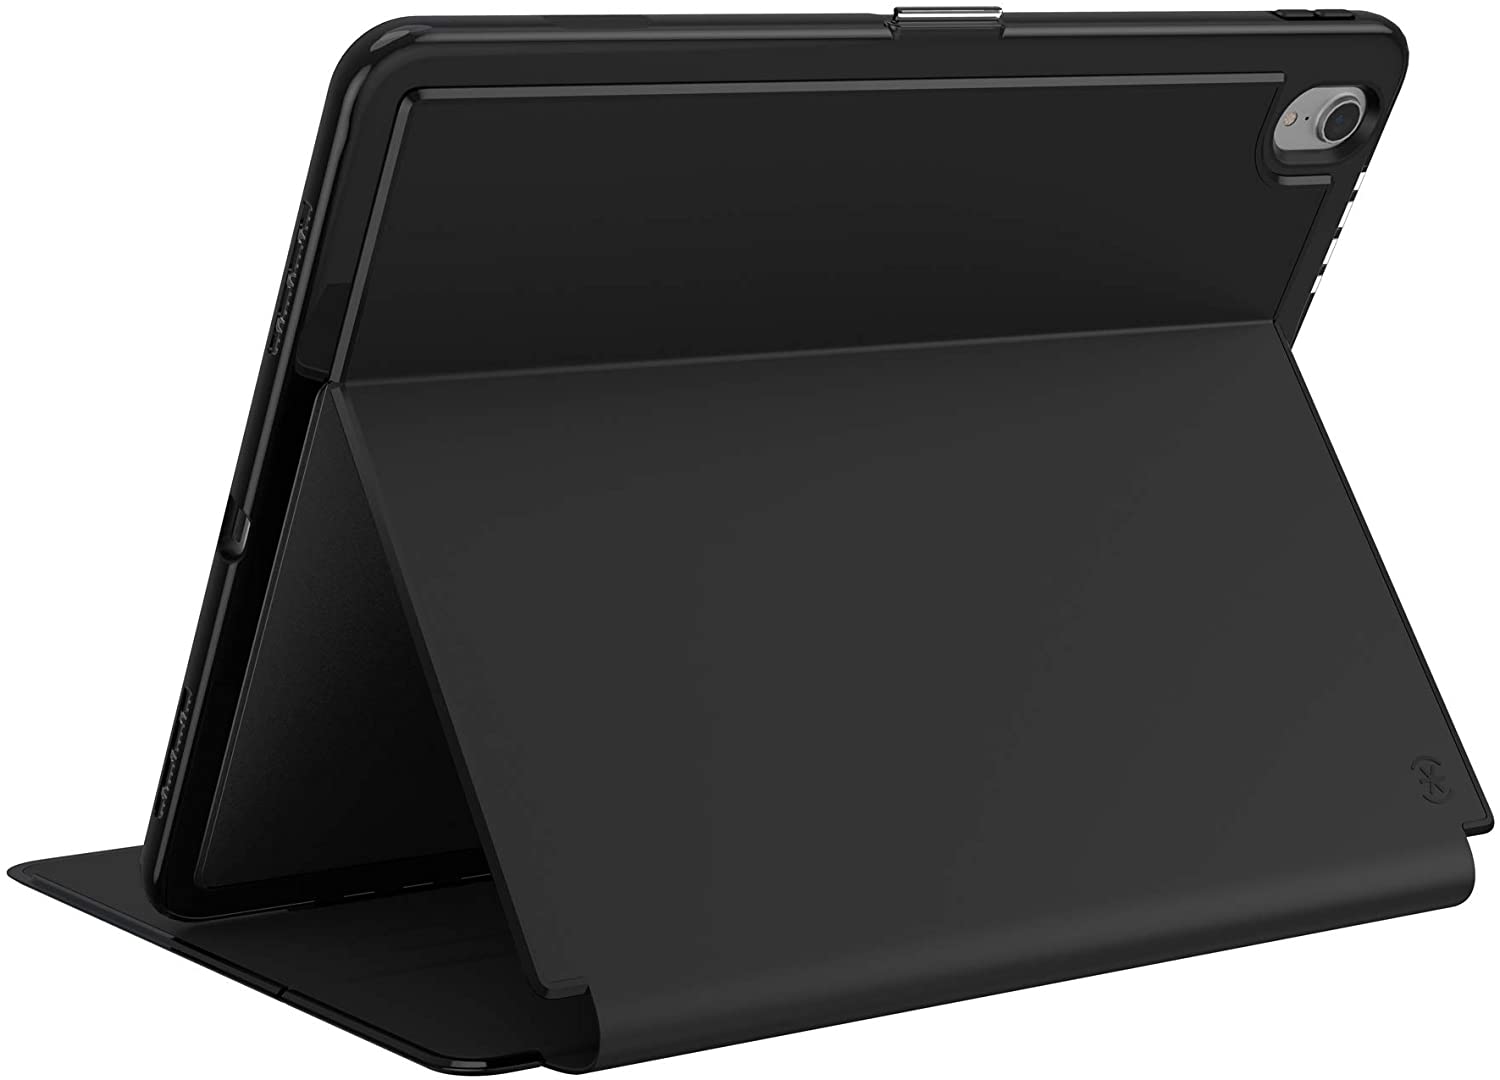  - Funda folio presidio para iPad 12.9 Speck black 1